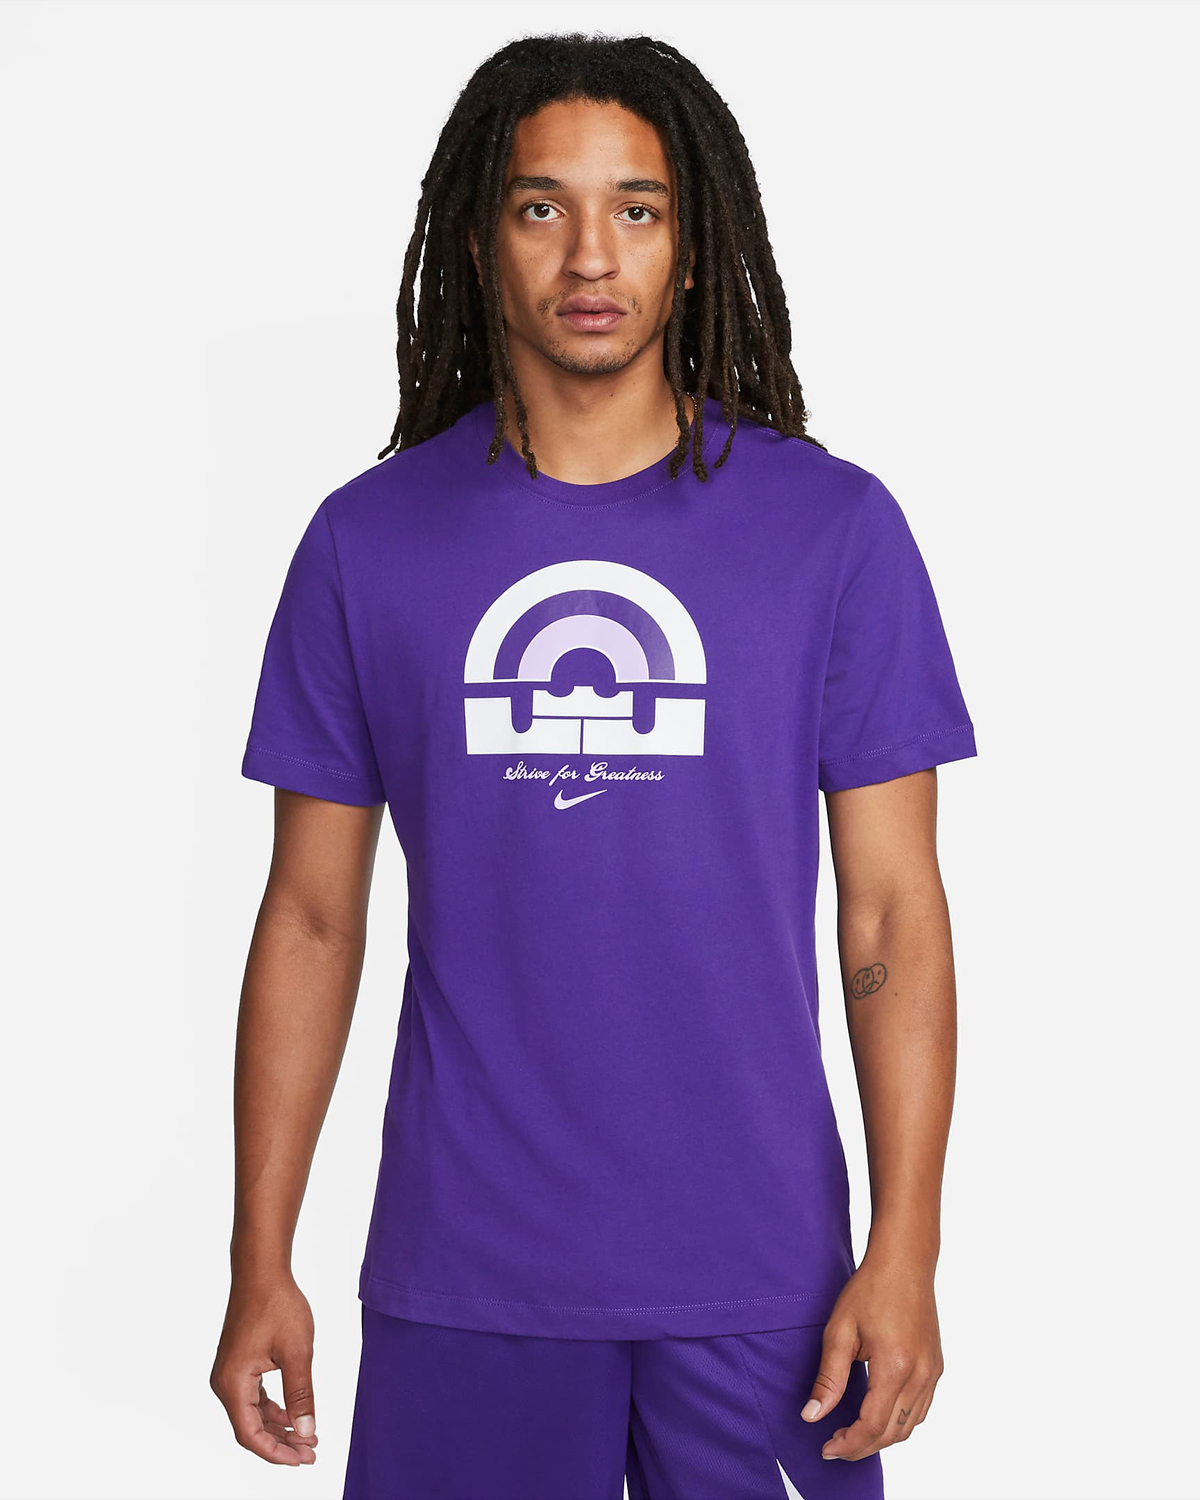 Nike-LeBron-20-T-Shirt-Purple